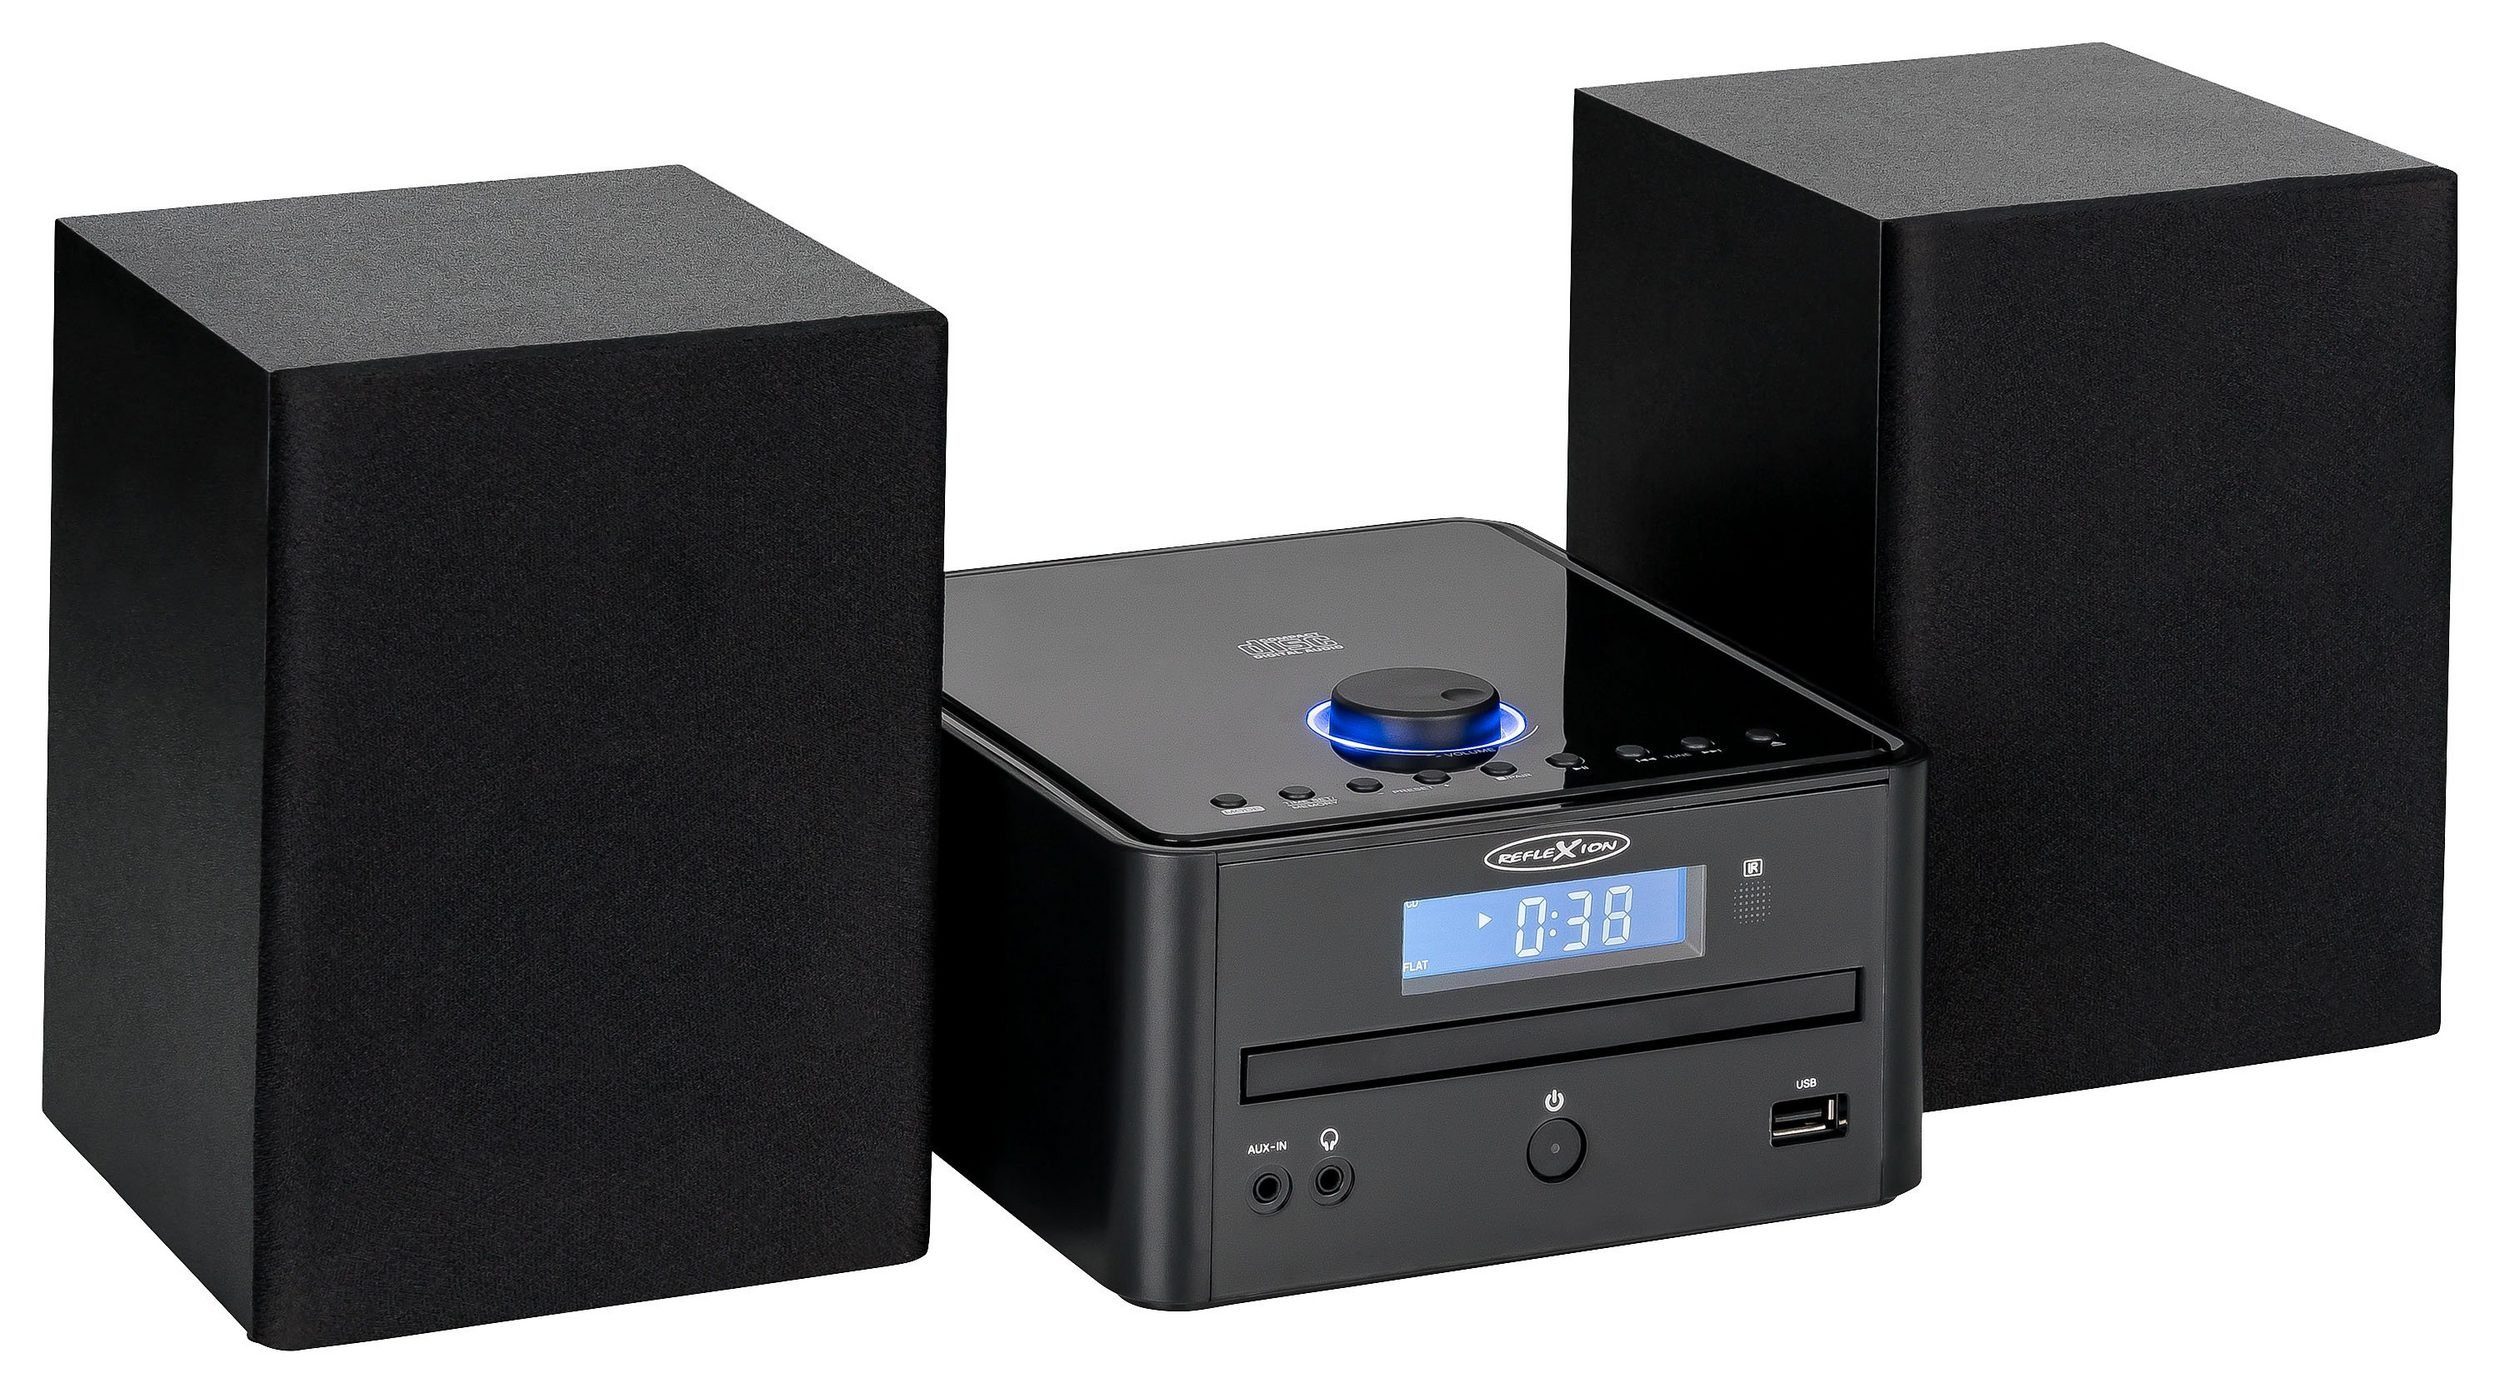 32,00 HIF79FM Bluetooth, Uhr, Sleep-Funktion) MP3/CD, W, Alarm, USB, (UKW, und Microanlage Reflexion